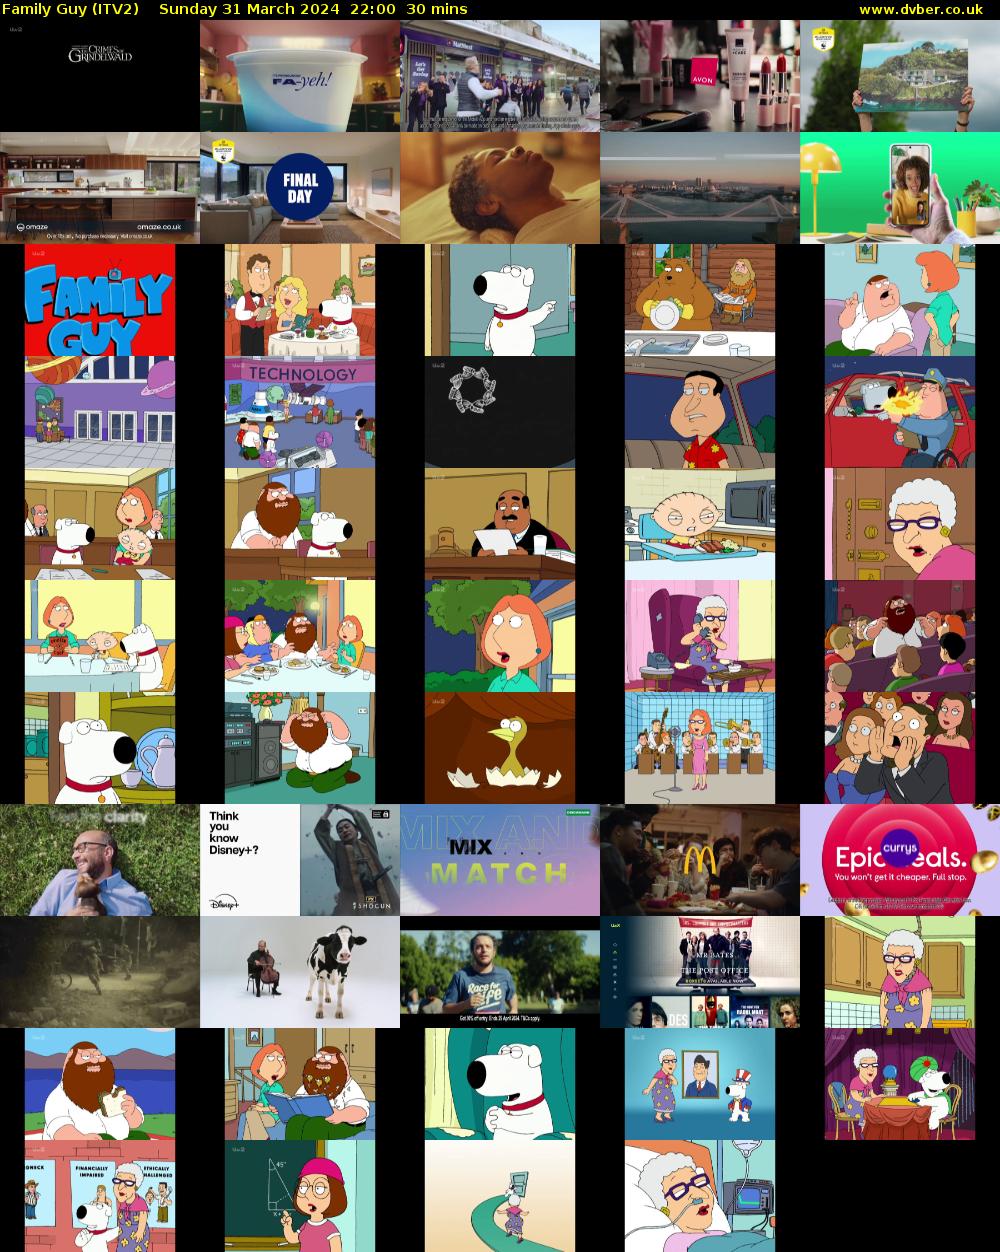 Family Guy (ITV2) Sunday 31 March 2024 22:00 - 22:30